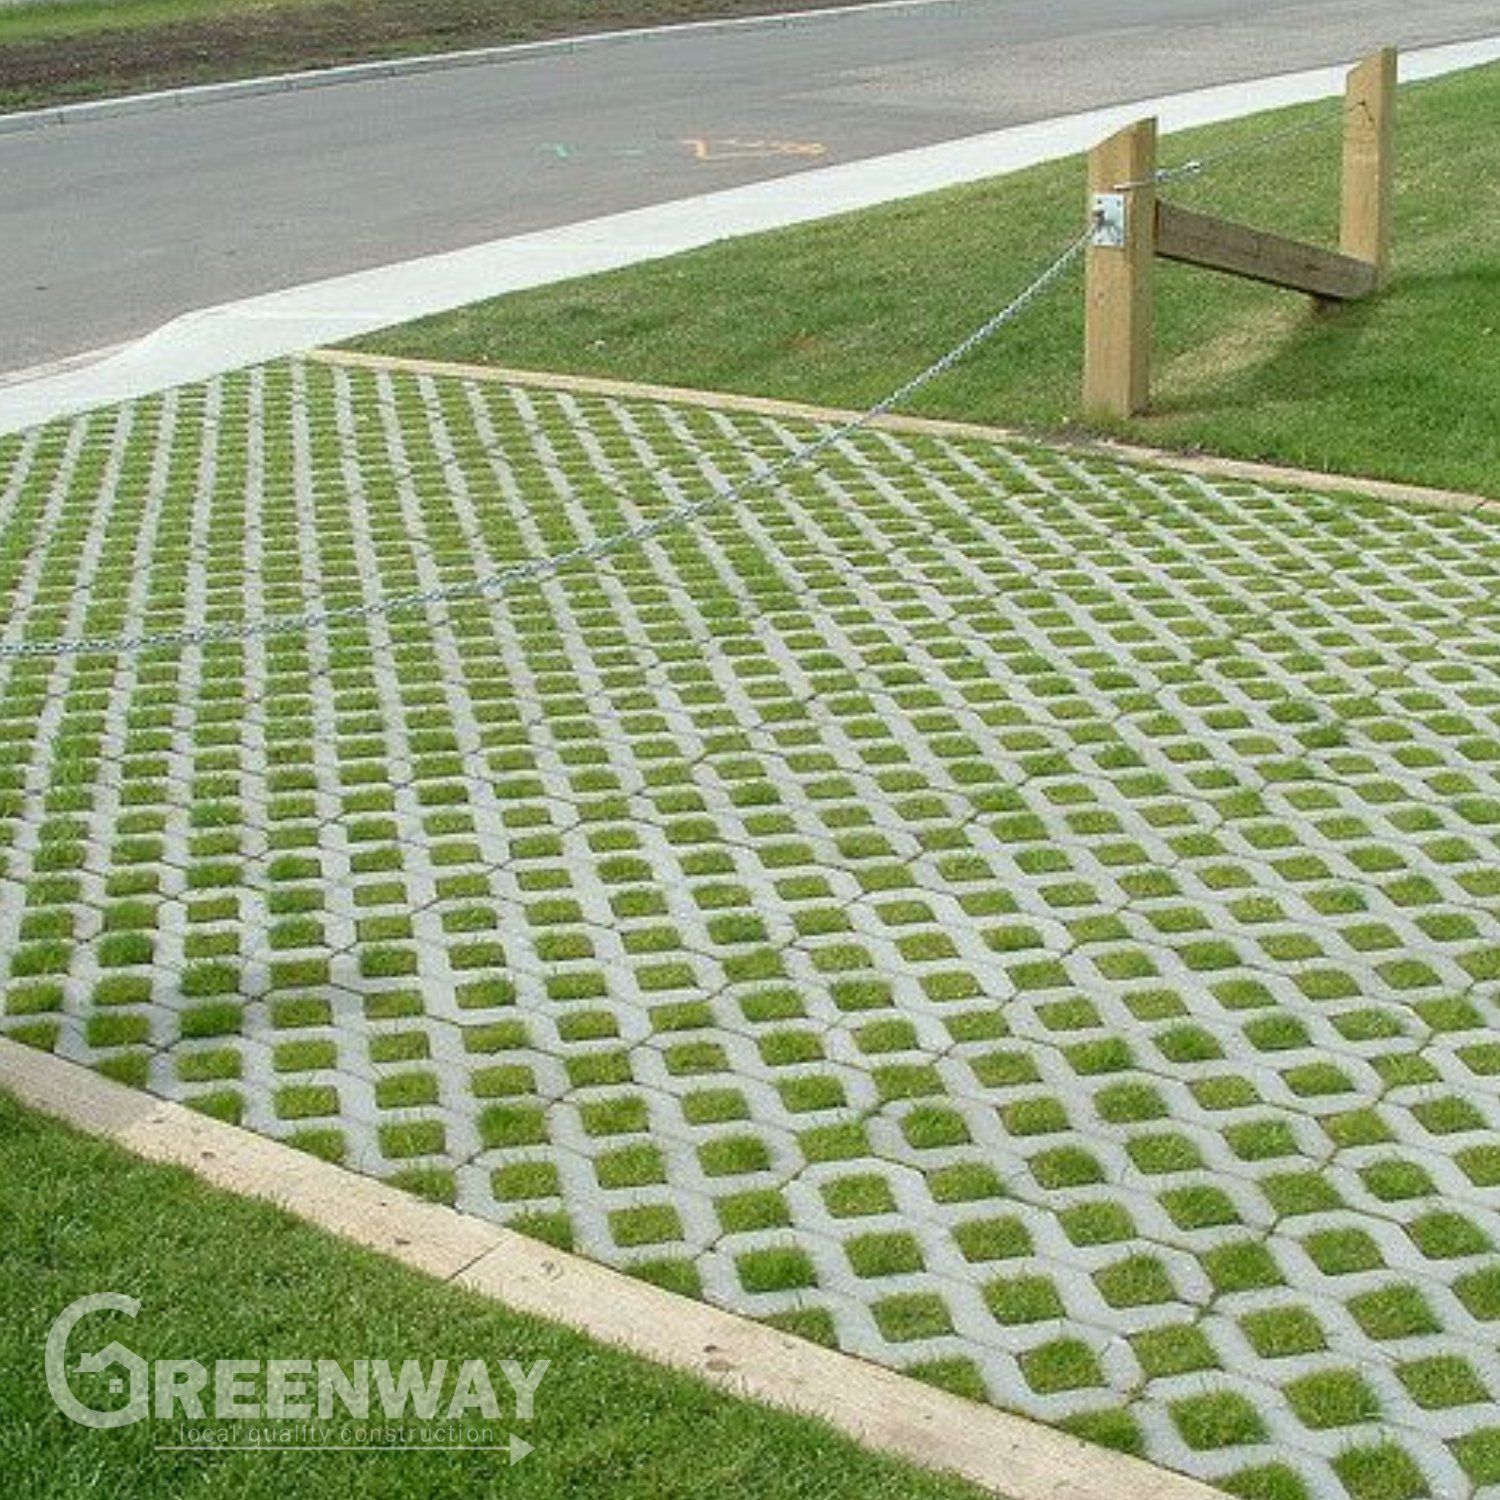 Greenway Sustainable Driveways